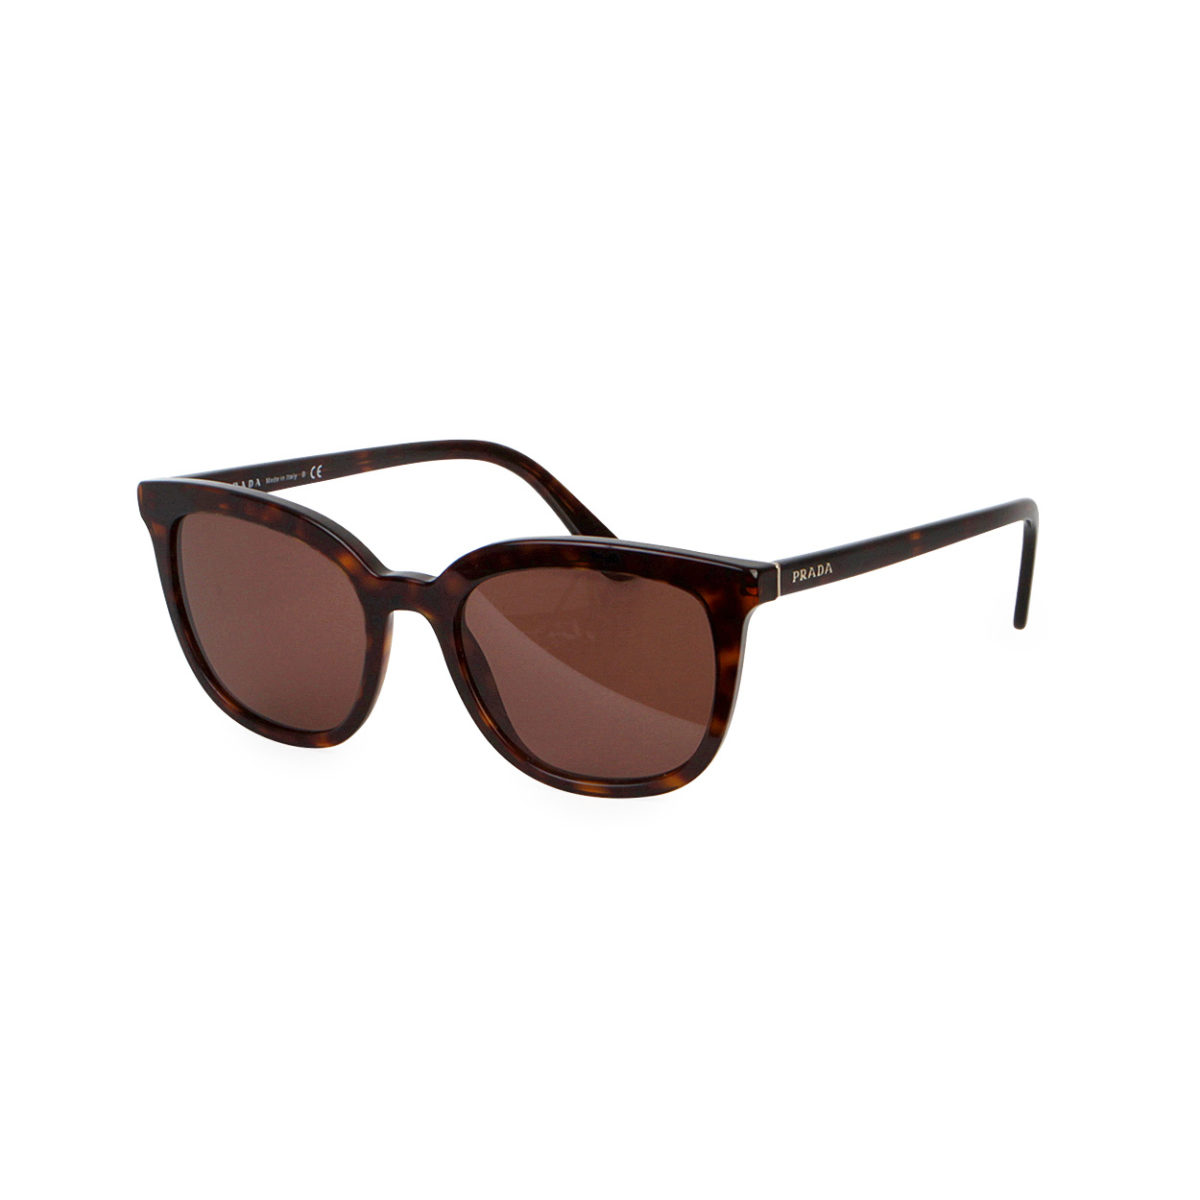 PRADA Sunglasses SPR 03 X Brown | Luxity